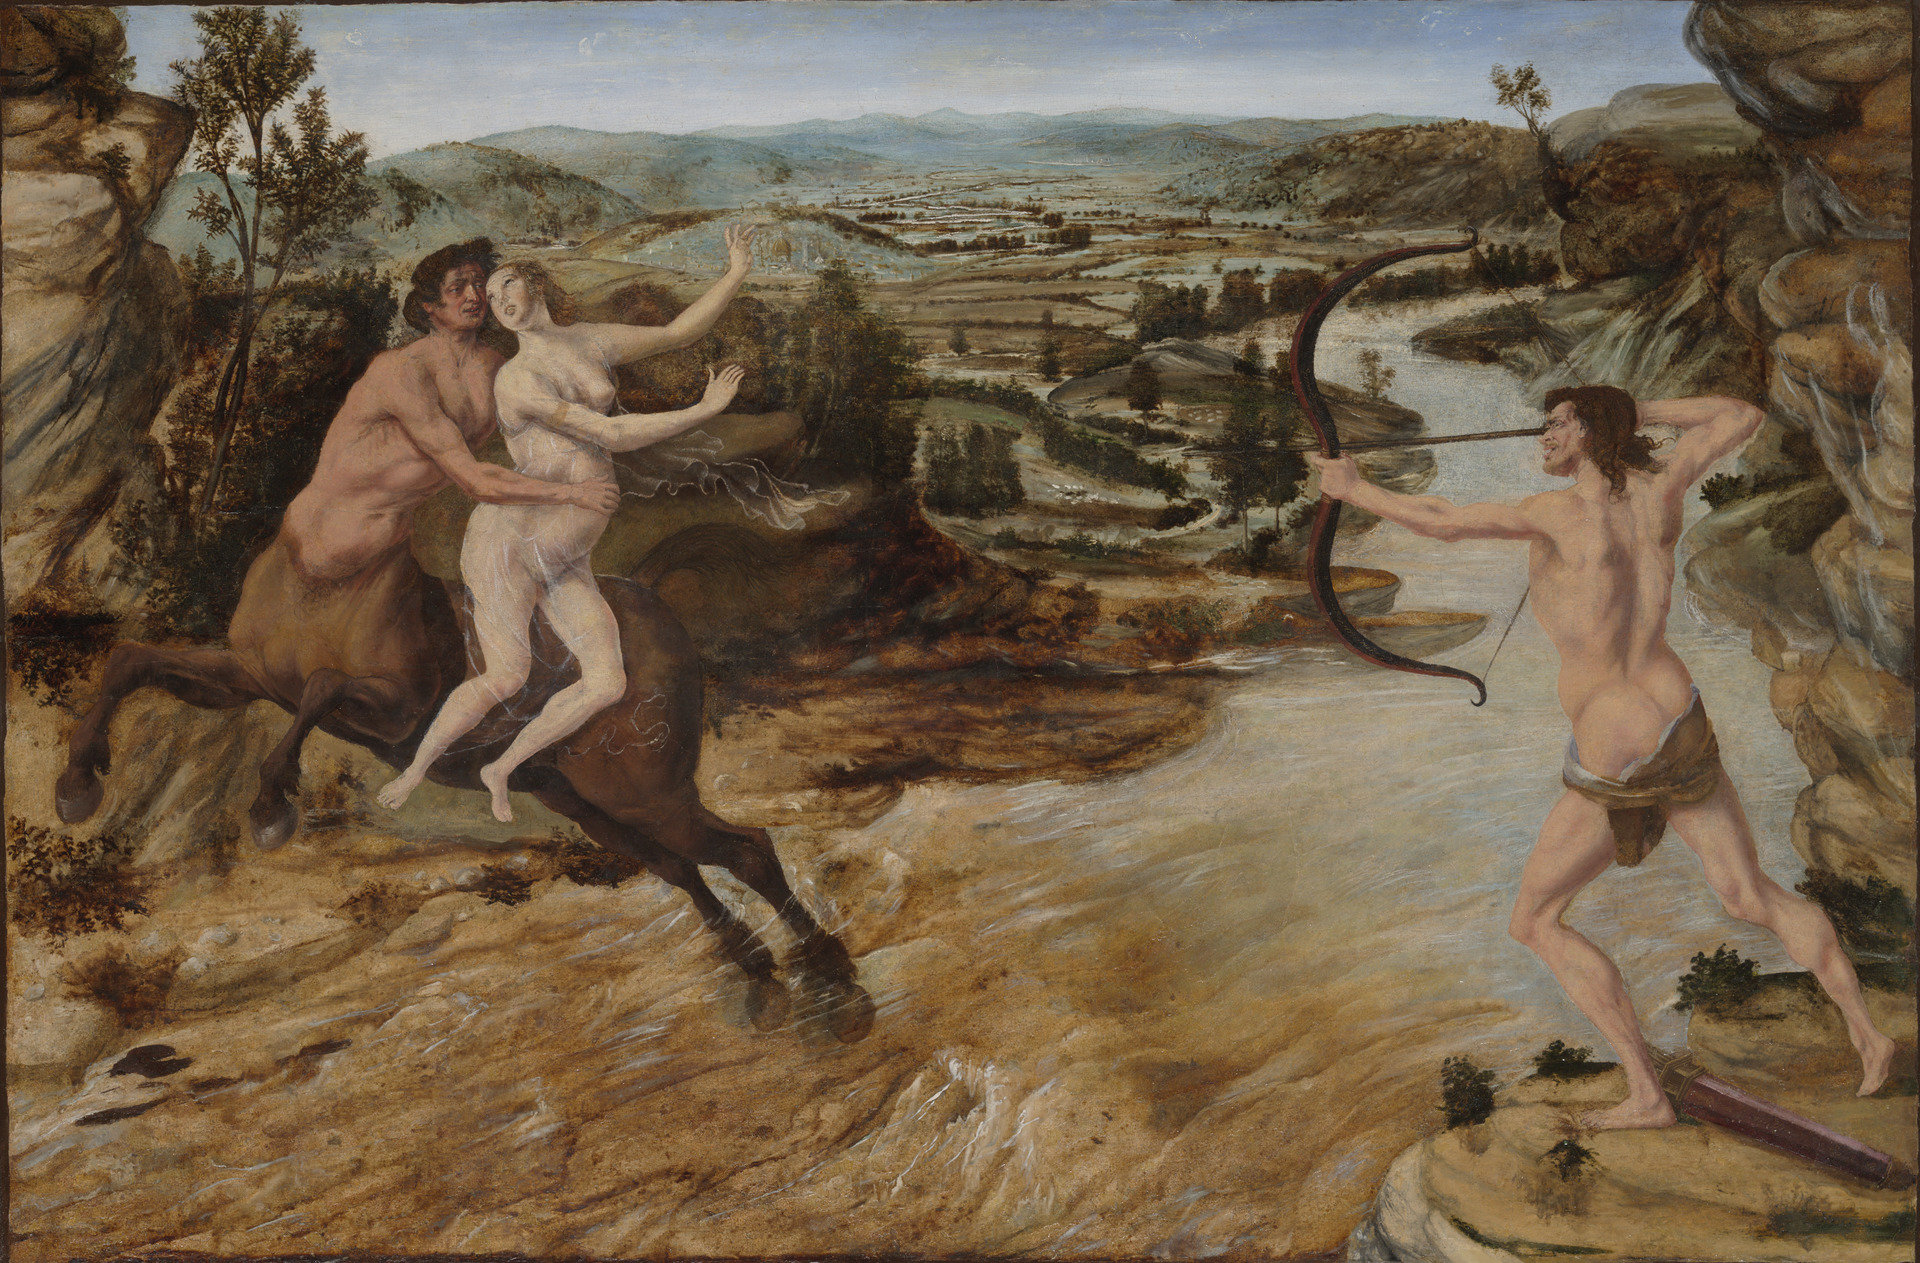 Antonio del Pollaiulo/Hercules and Deianira (Yale University Art Gallery)